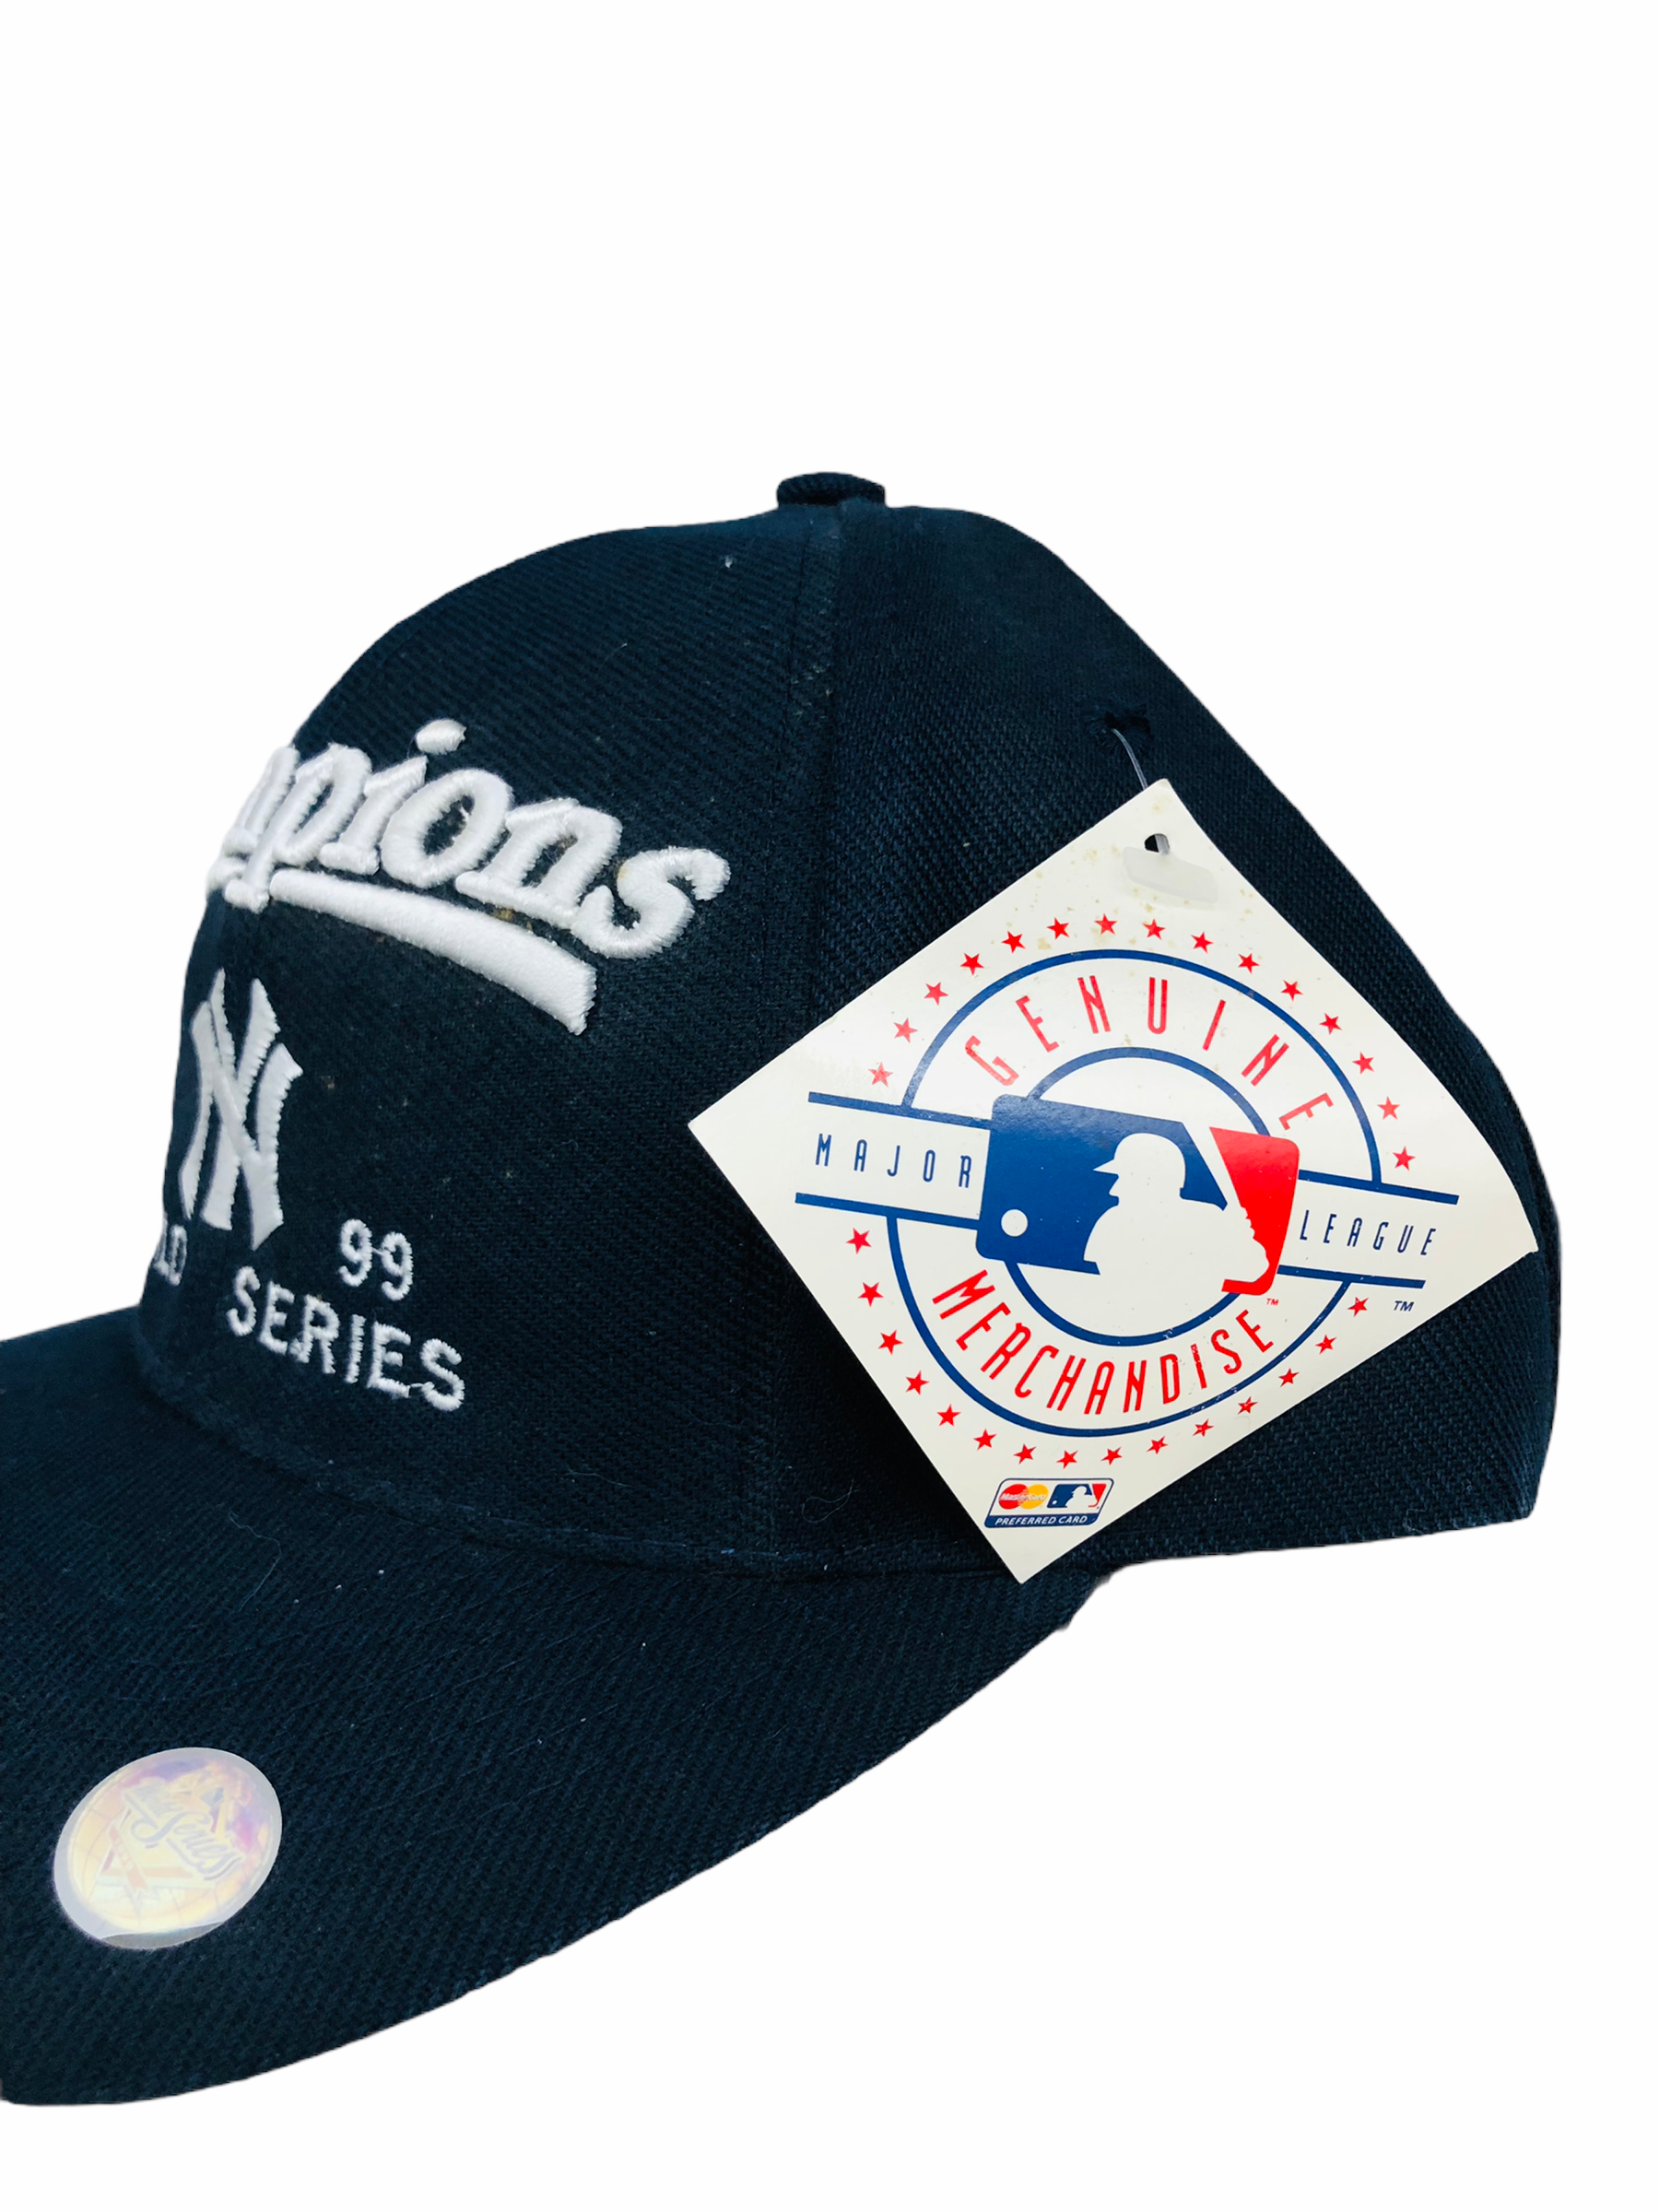 Baseball cap New York Yankees, baseball cap, hat, mLB, baseball png